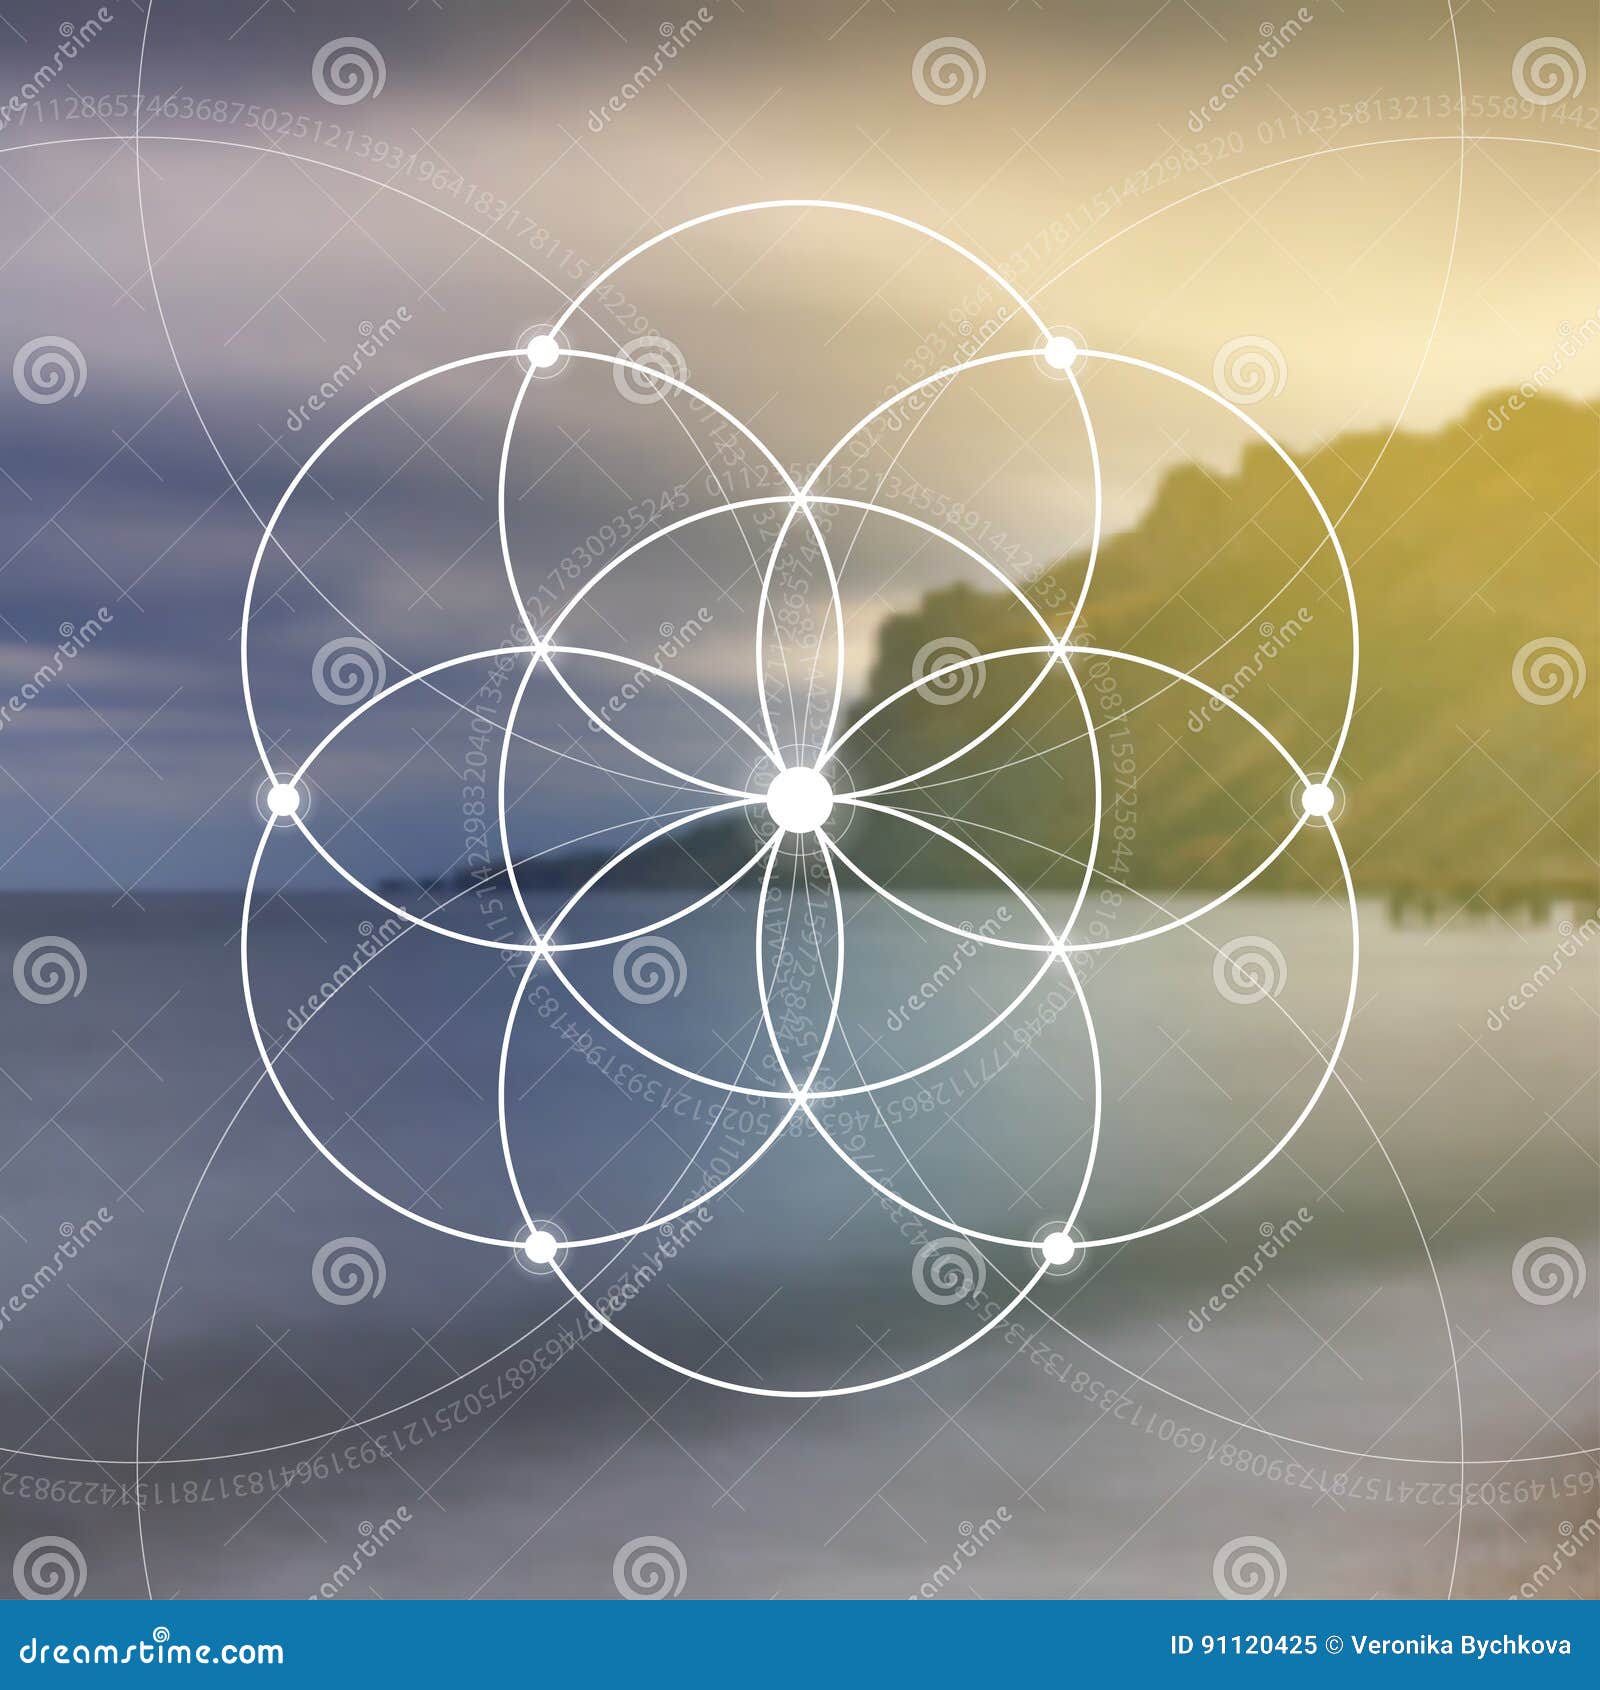 flower of life - the interlocking circles ancient . sacred geometry. mathematics, nature, and spirituality in nature. fibona